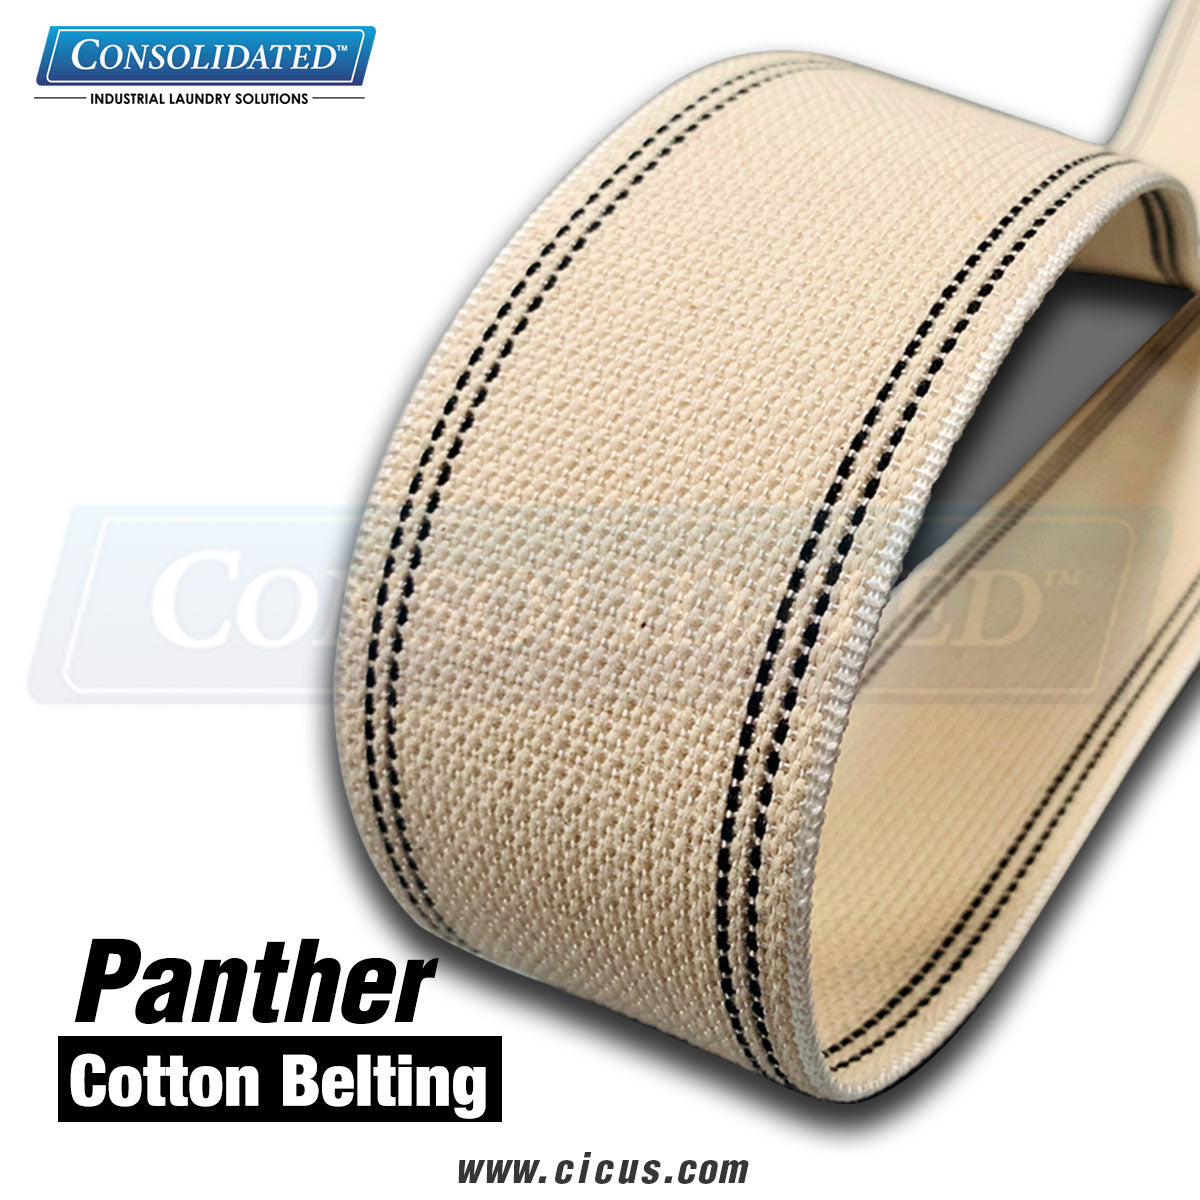 Panther Anti-Stretch Cotton Belts - 2" x 214" [1001-054P]